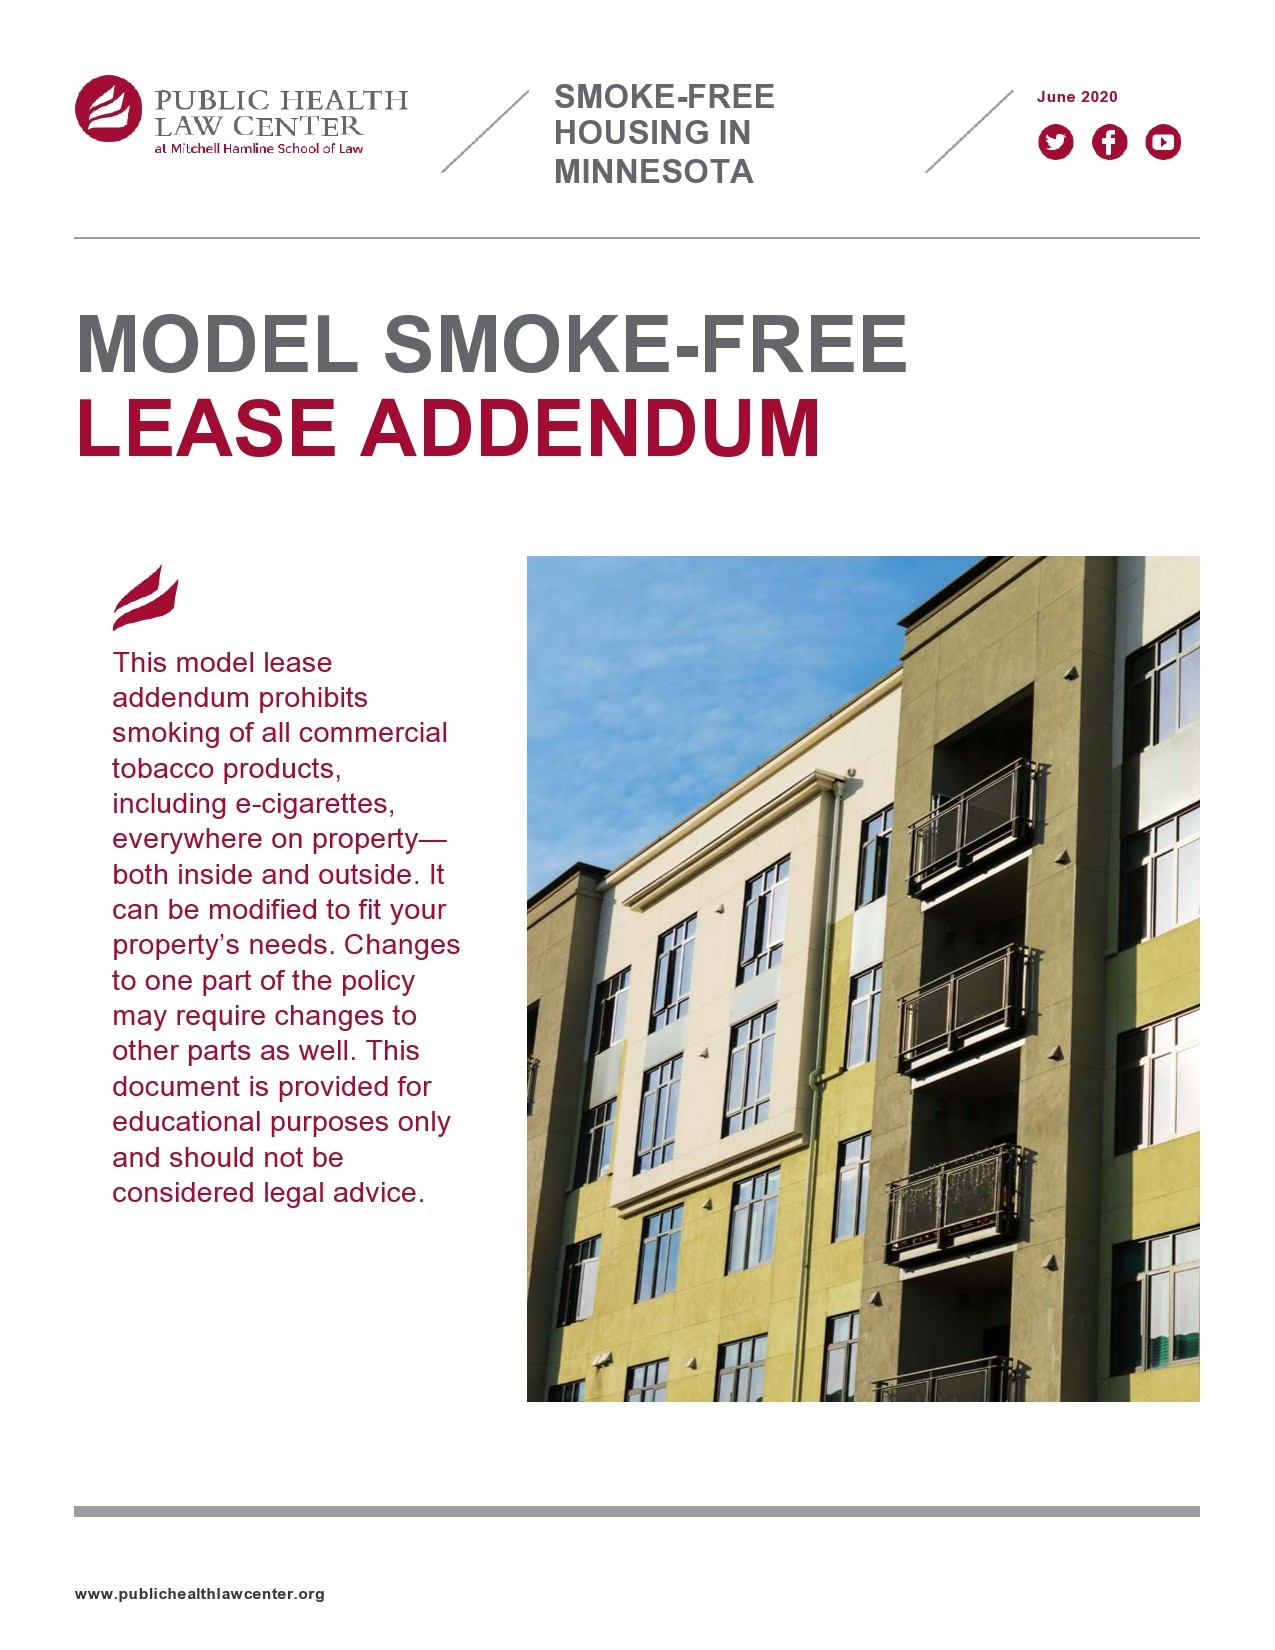 Free lease addendum 26